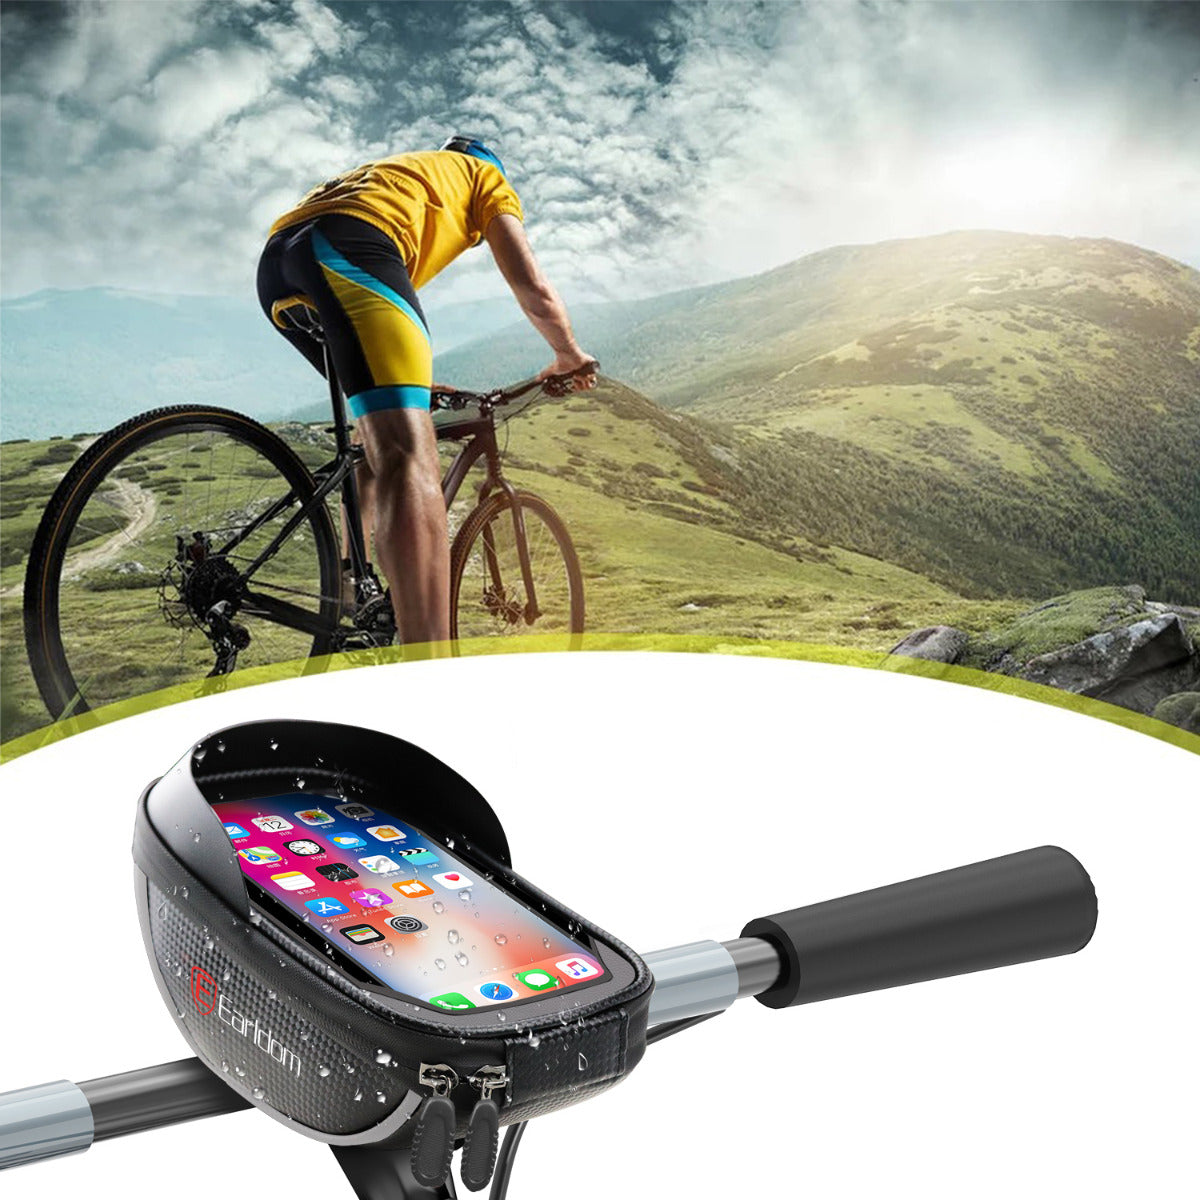 Earldom Waterproof Phone Mount for Bicycle, Bike Phone Holder with Bag